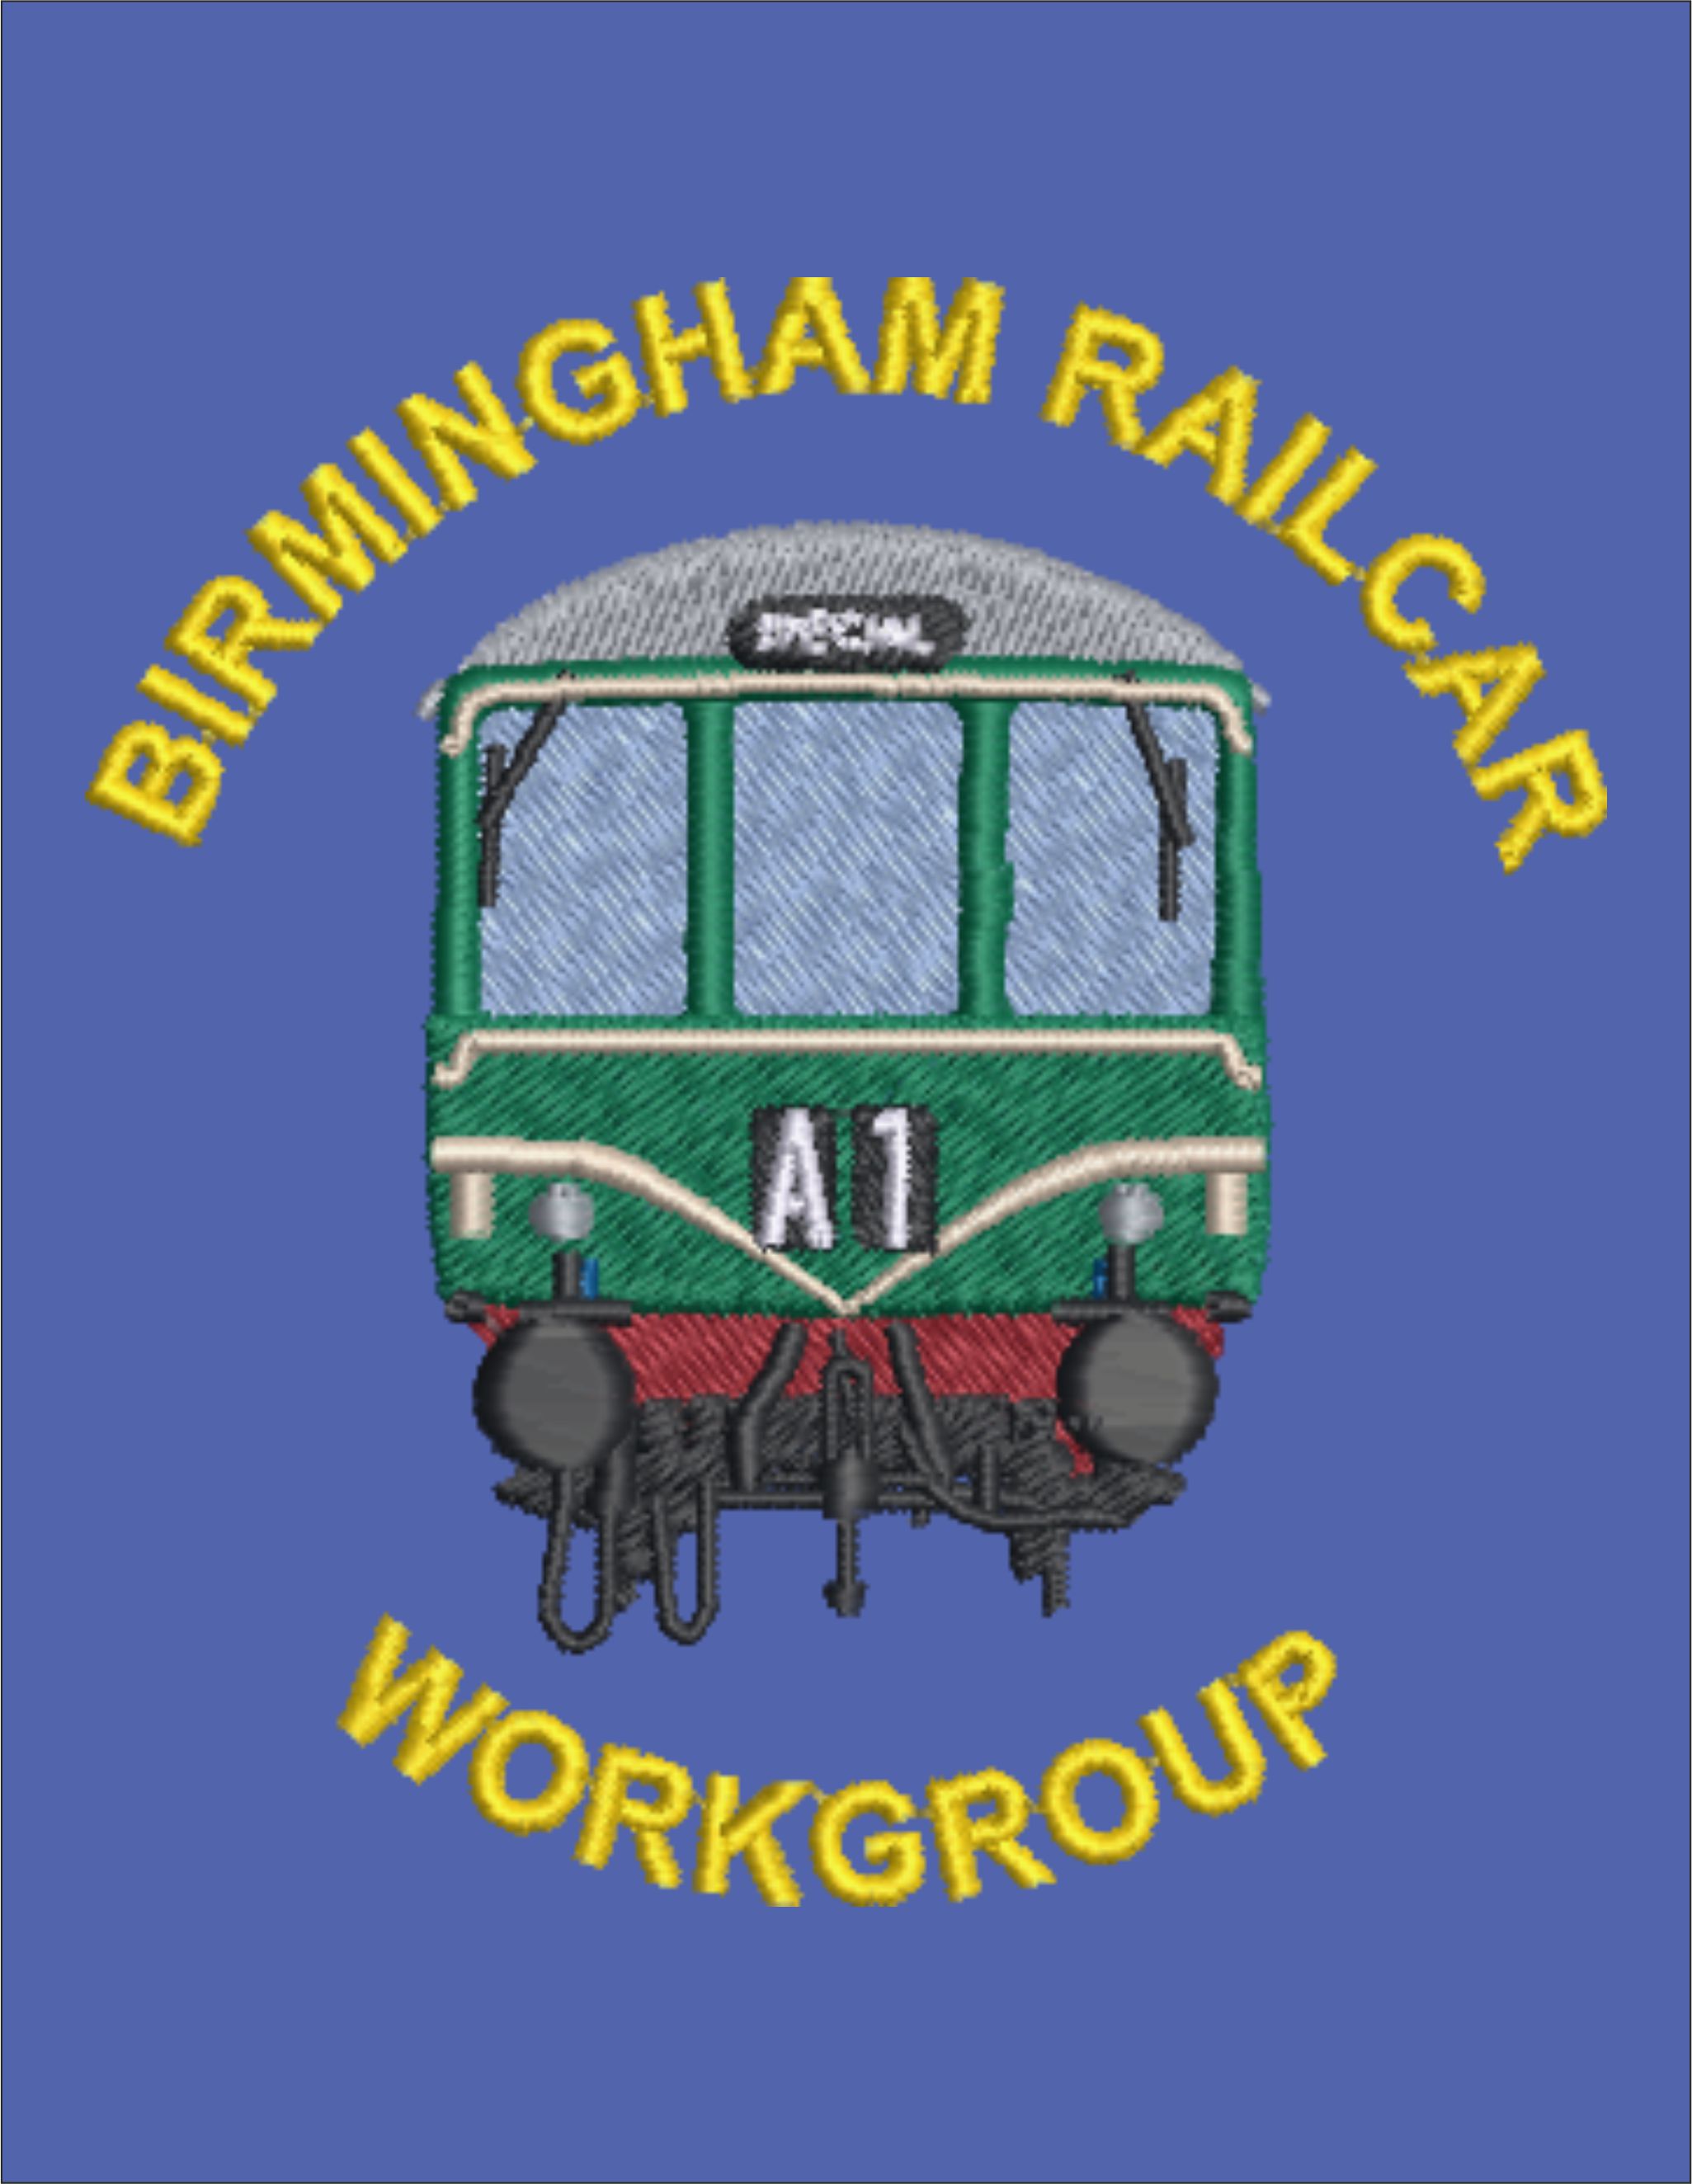 Birminghan Railcar Logo